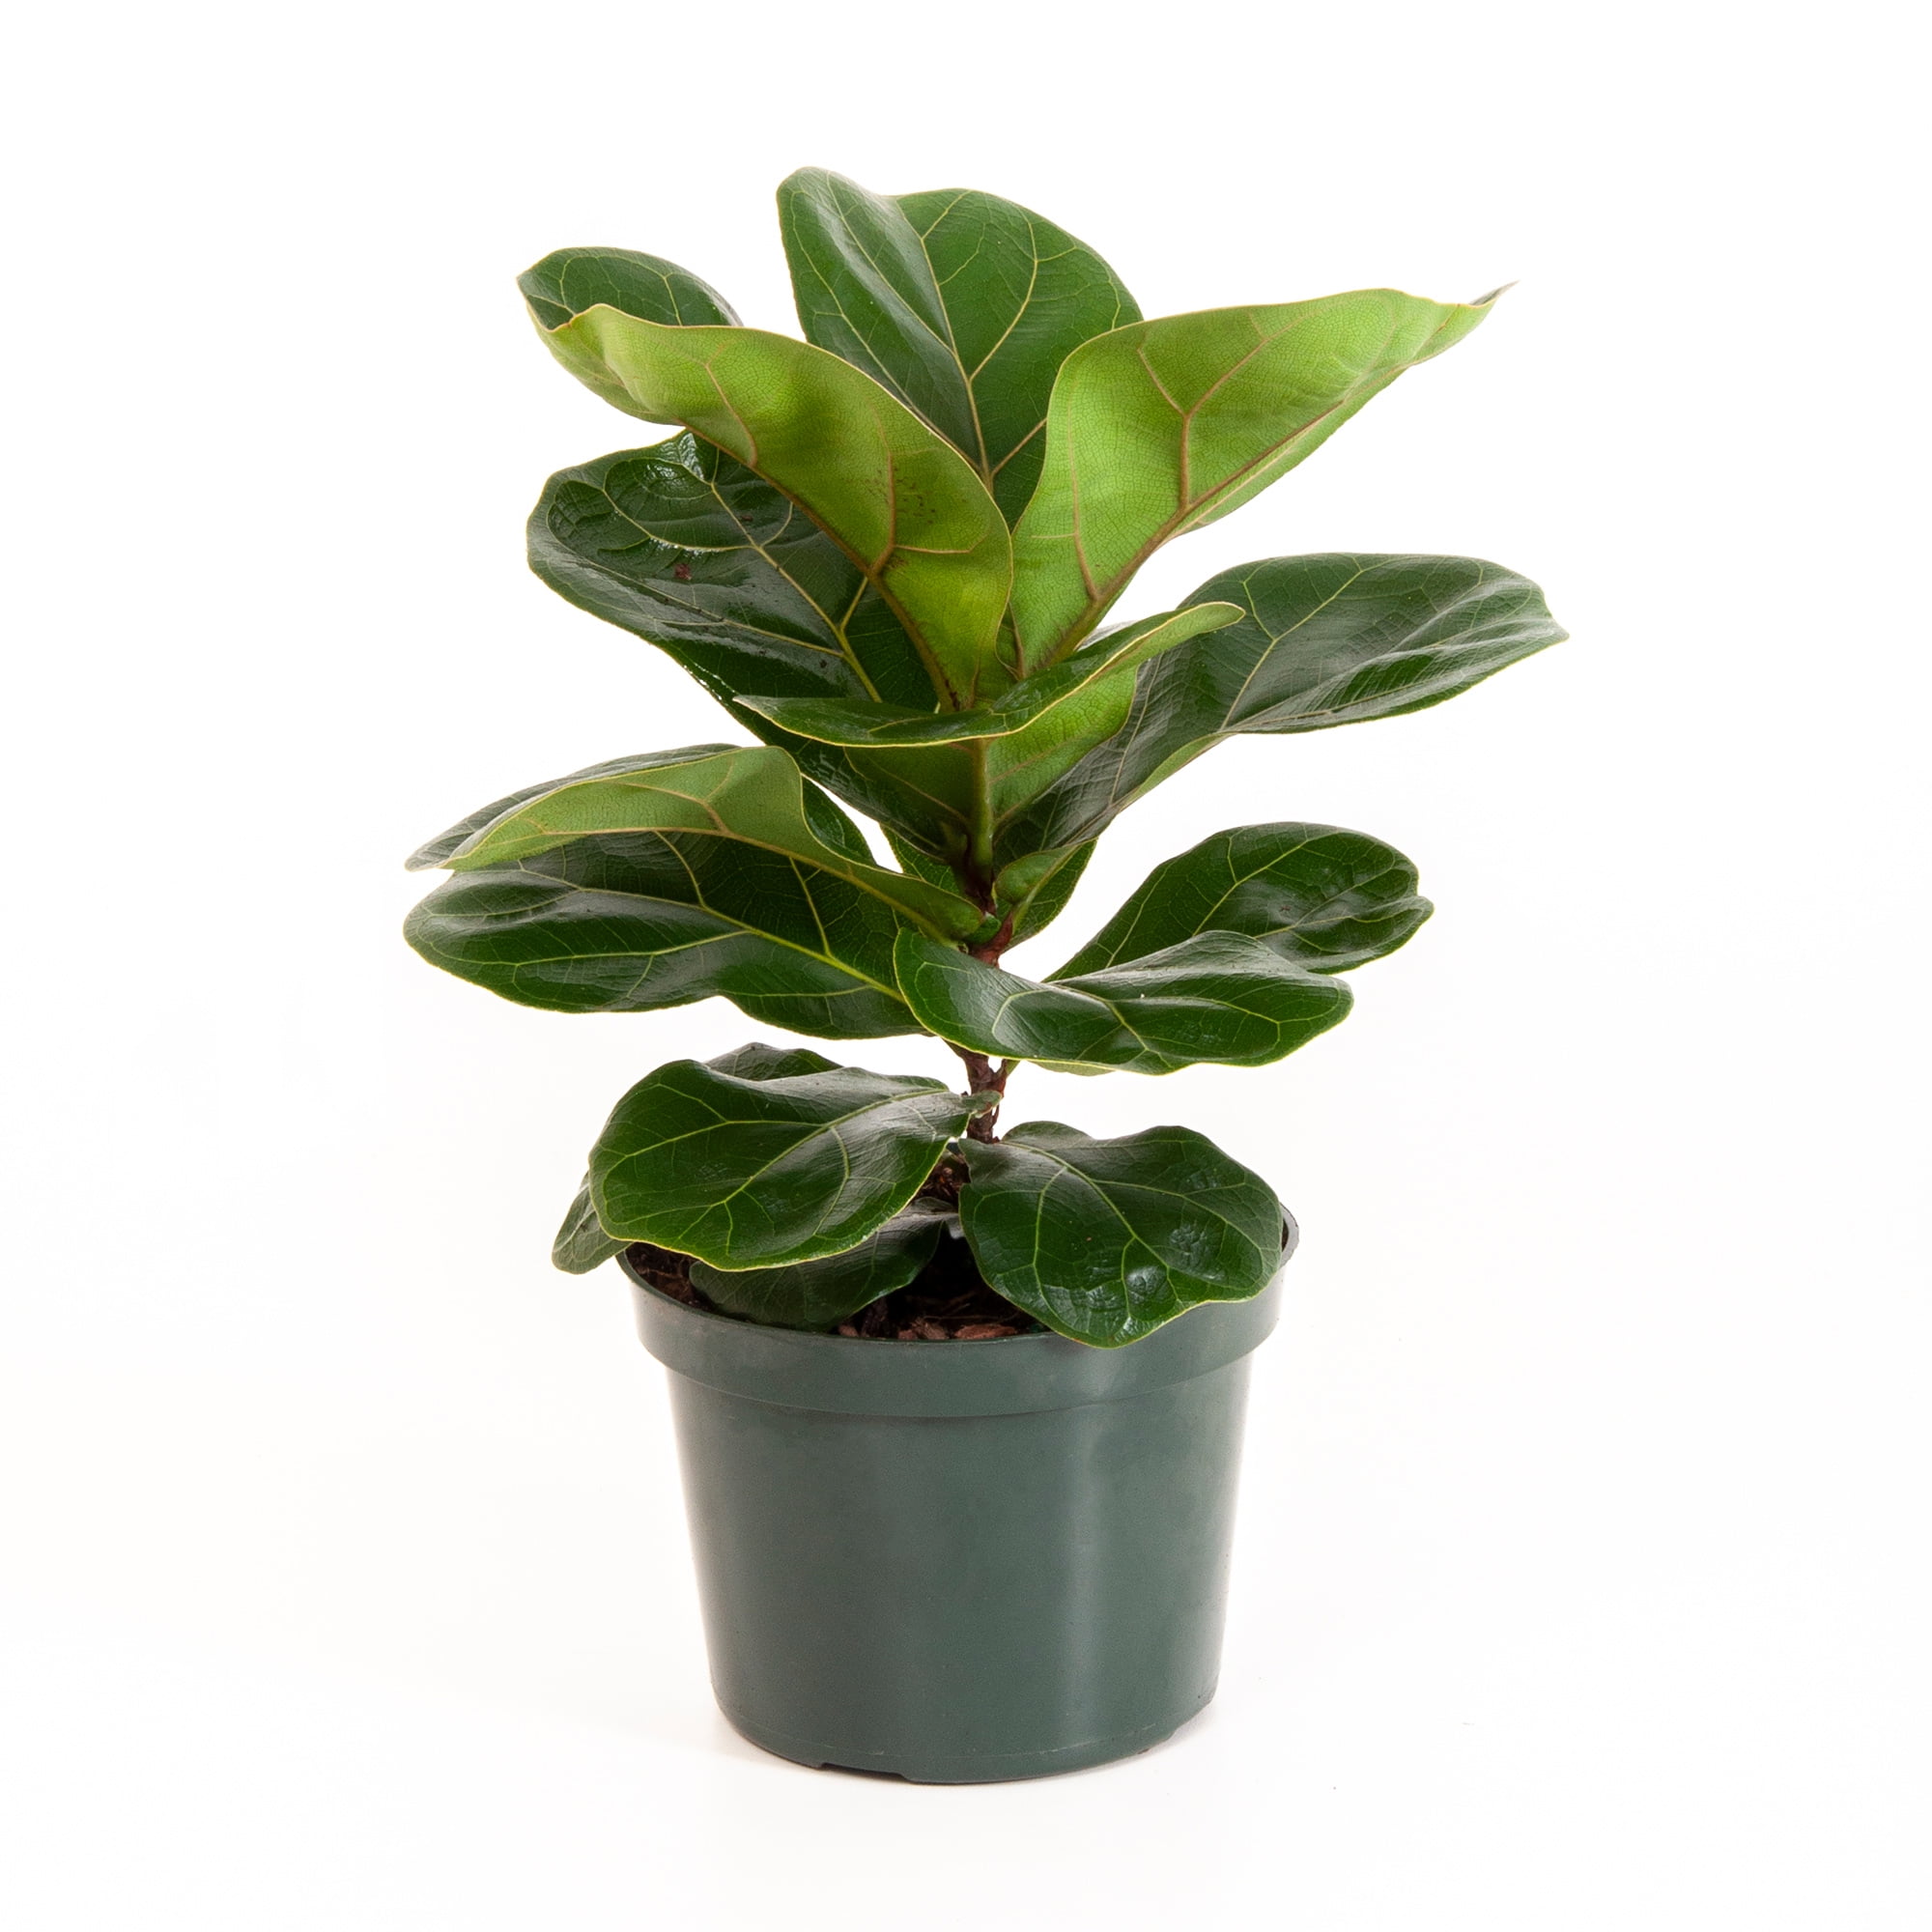 United Nursery Live Fiddle Leaf Fig 12-18 Inches Tall Ficus Lyrata in 6 Inch Grower Pot - Walmart.com